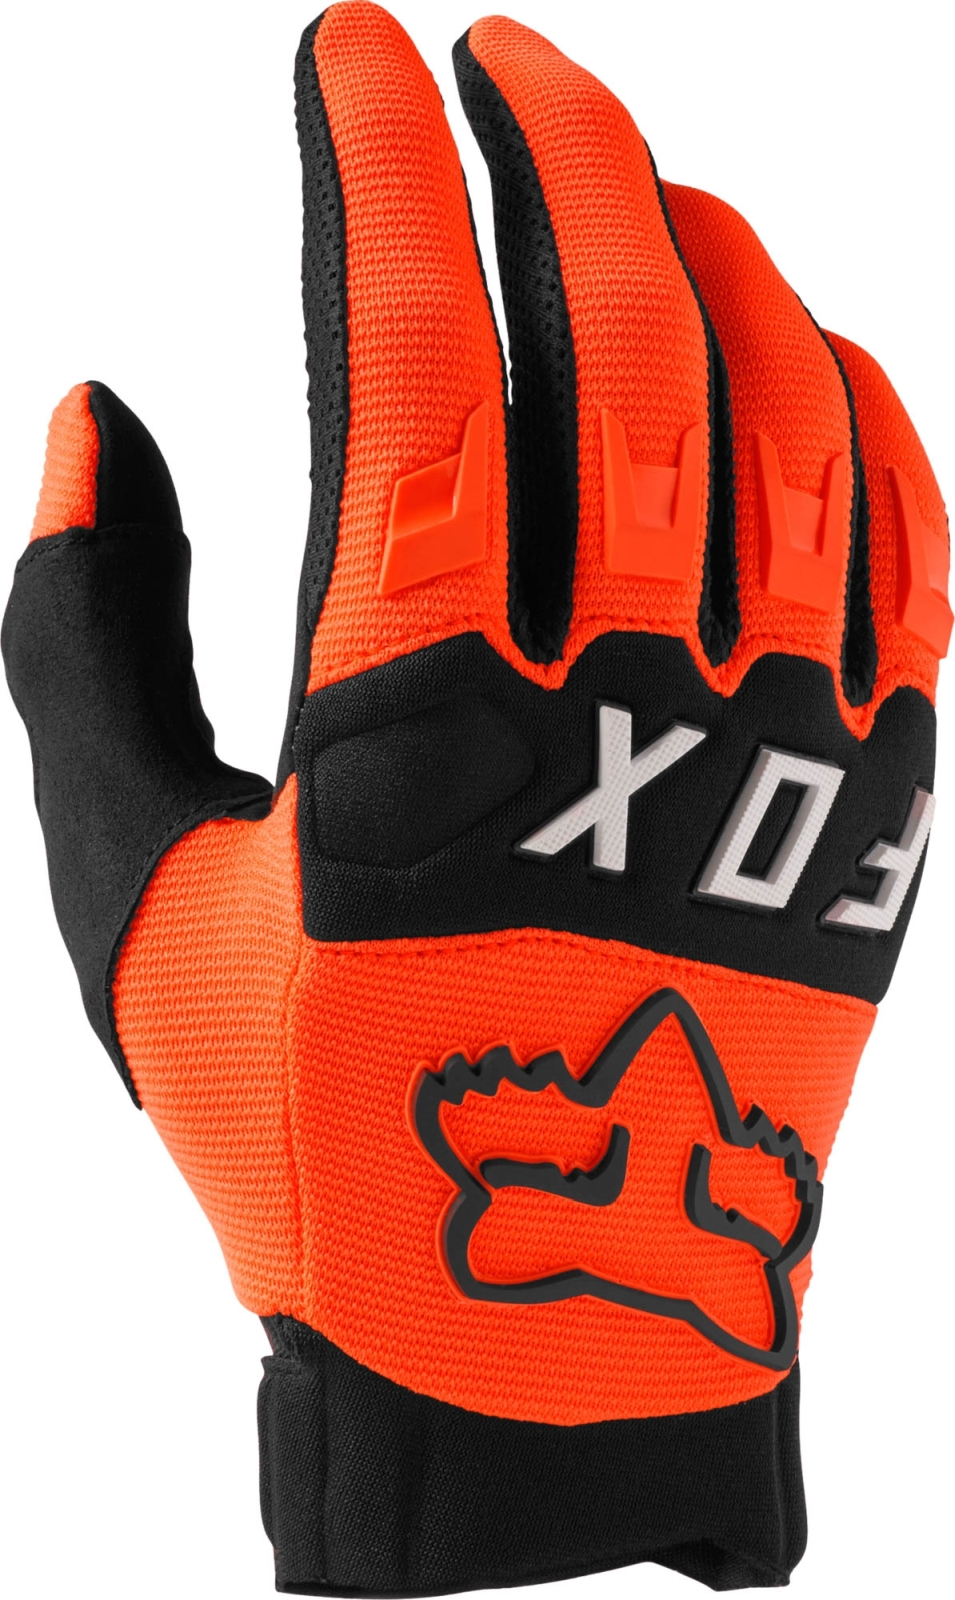 E-shop FOX Dirtpaw Glove - Fluo Orange 9